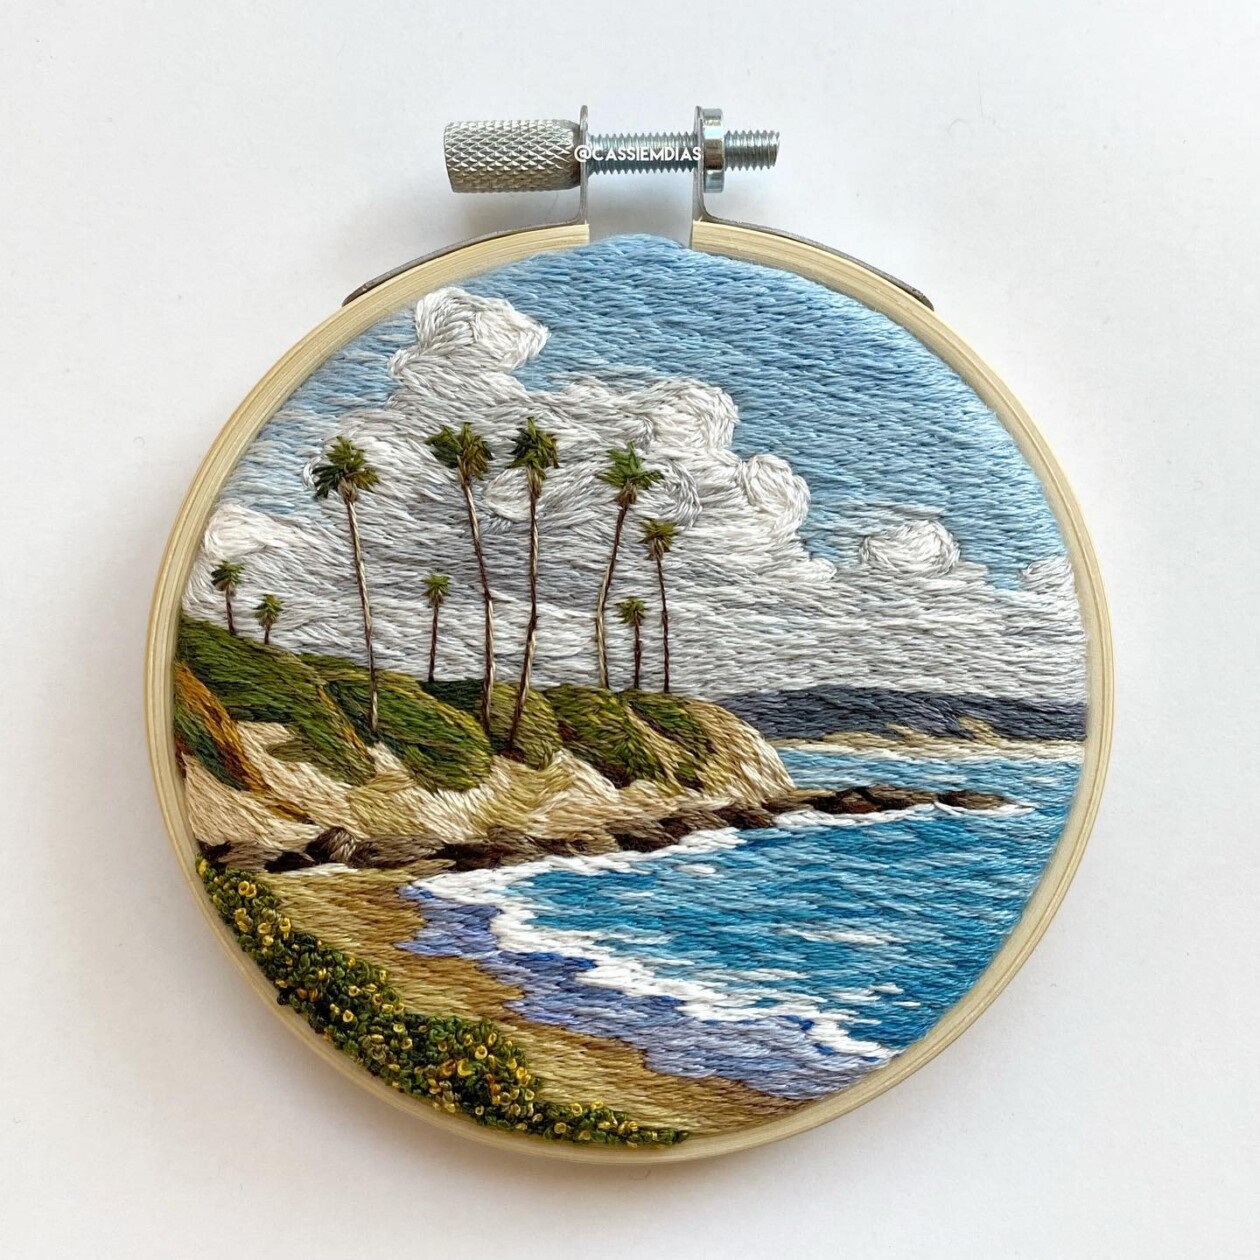 Wonderful Impressionistic Landscape Embroideries By Cassandra Dias (3)